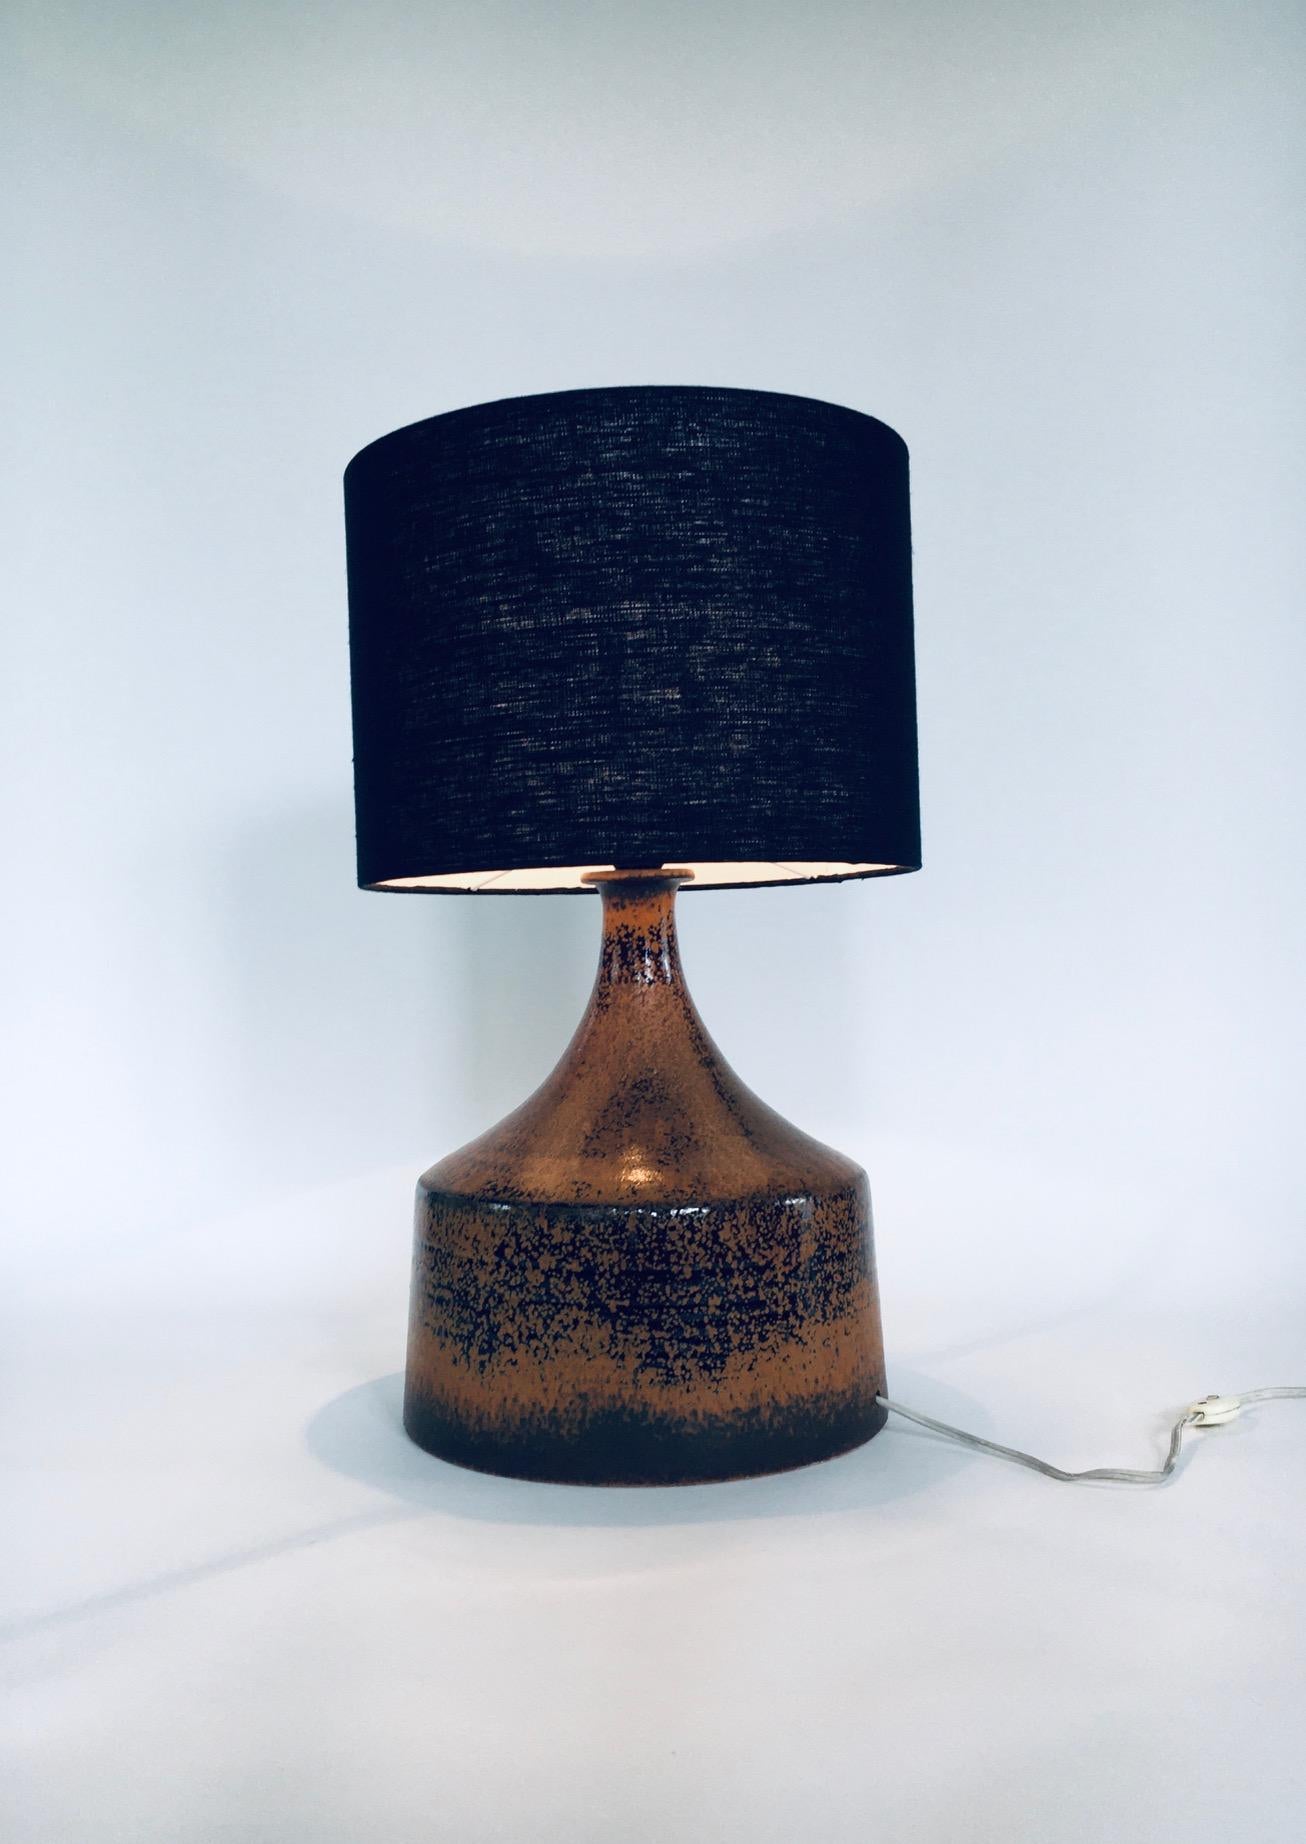 Midcentury Scandinavian Design Ceramic Table Lamp by Aypot, Sweden 1970's For Sale 7